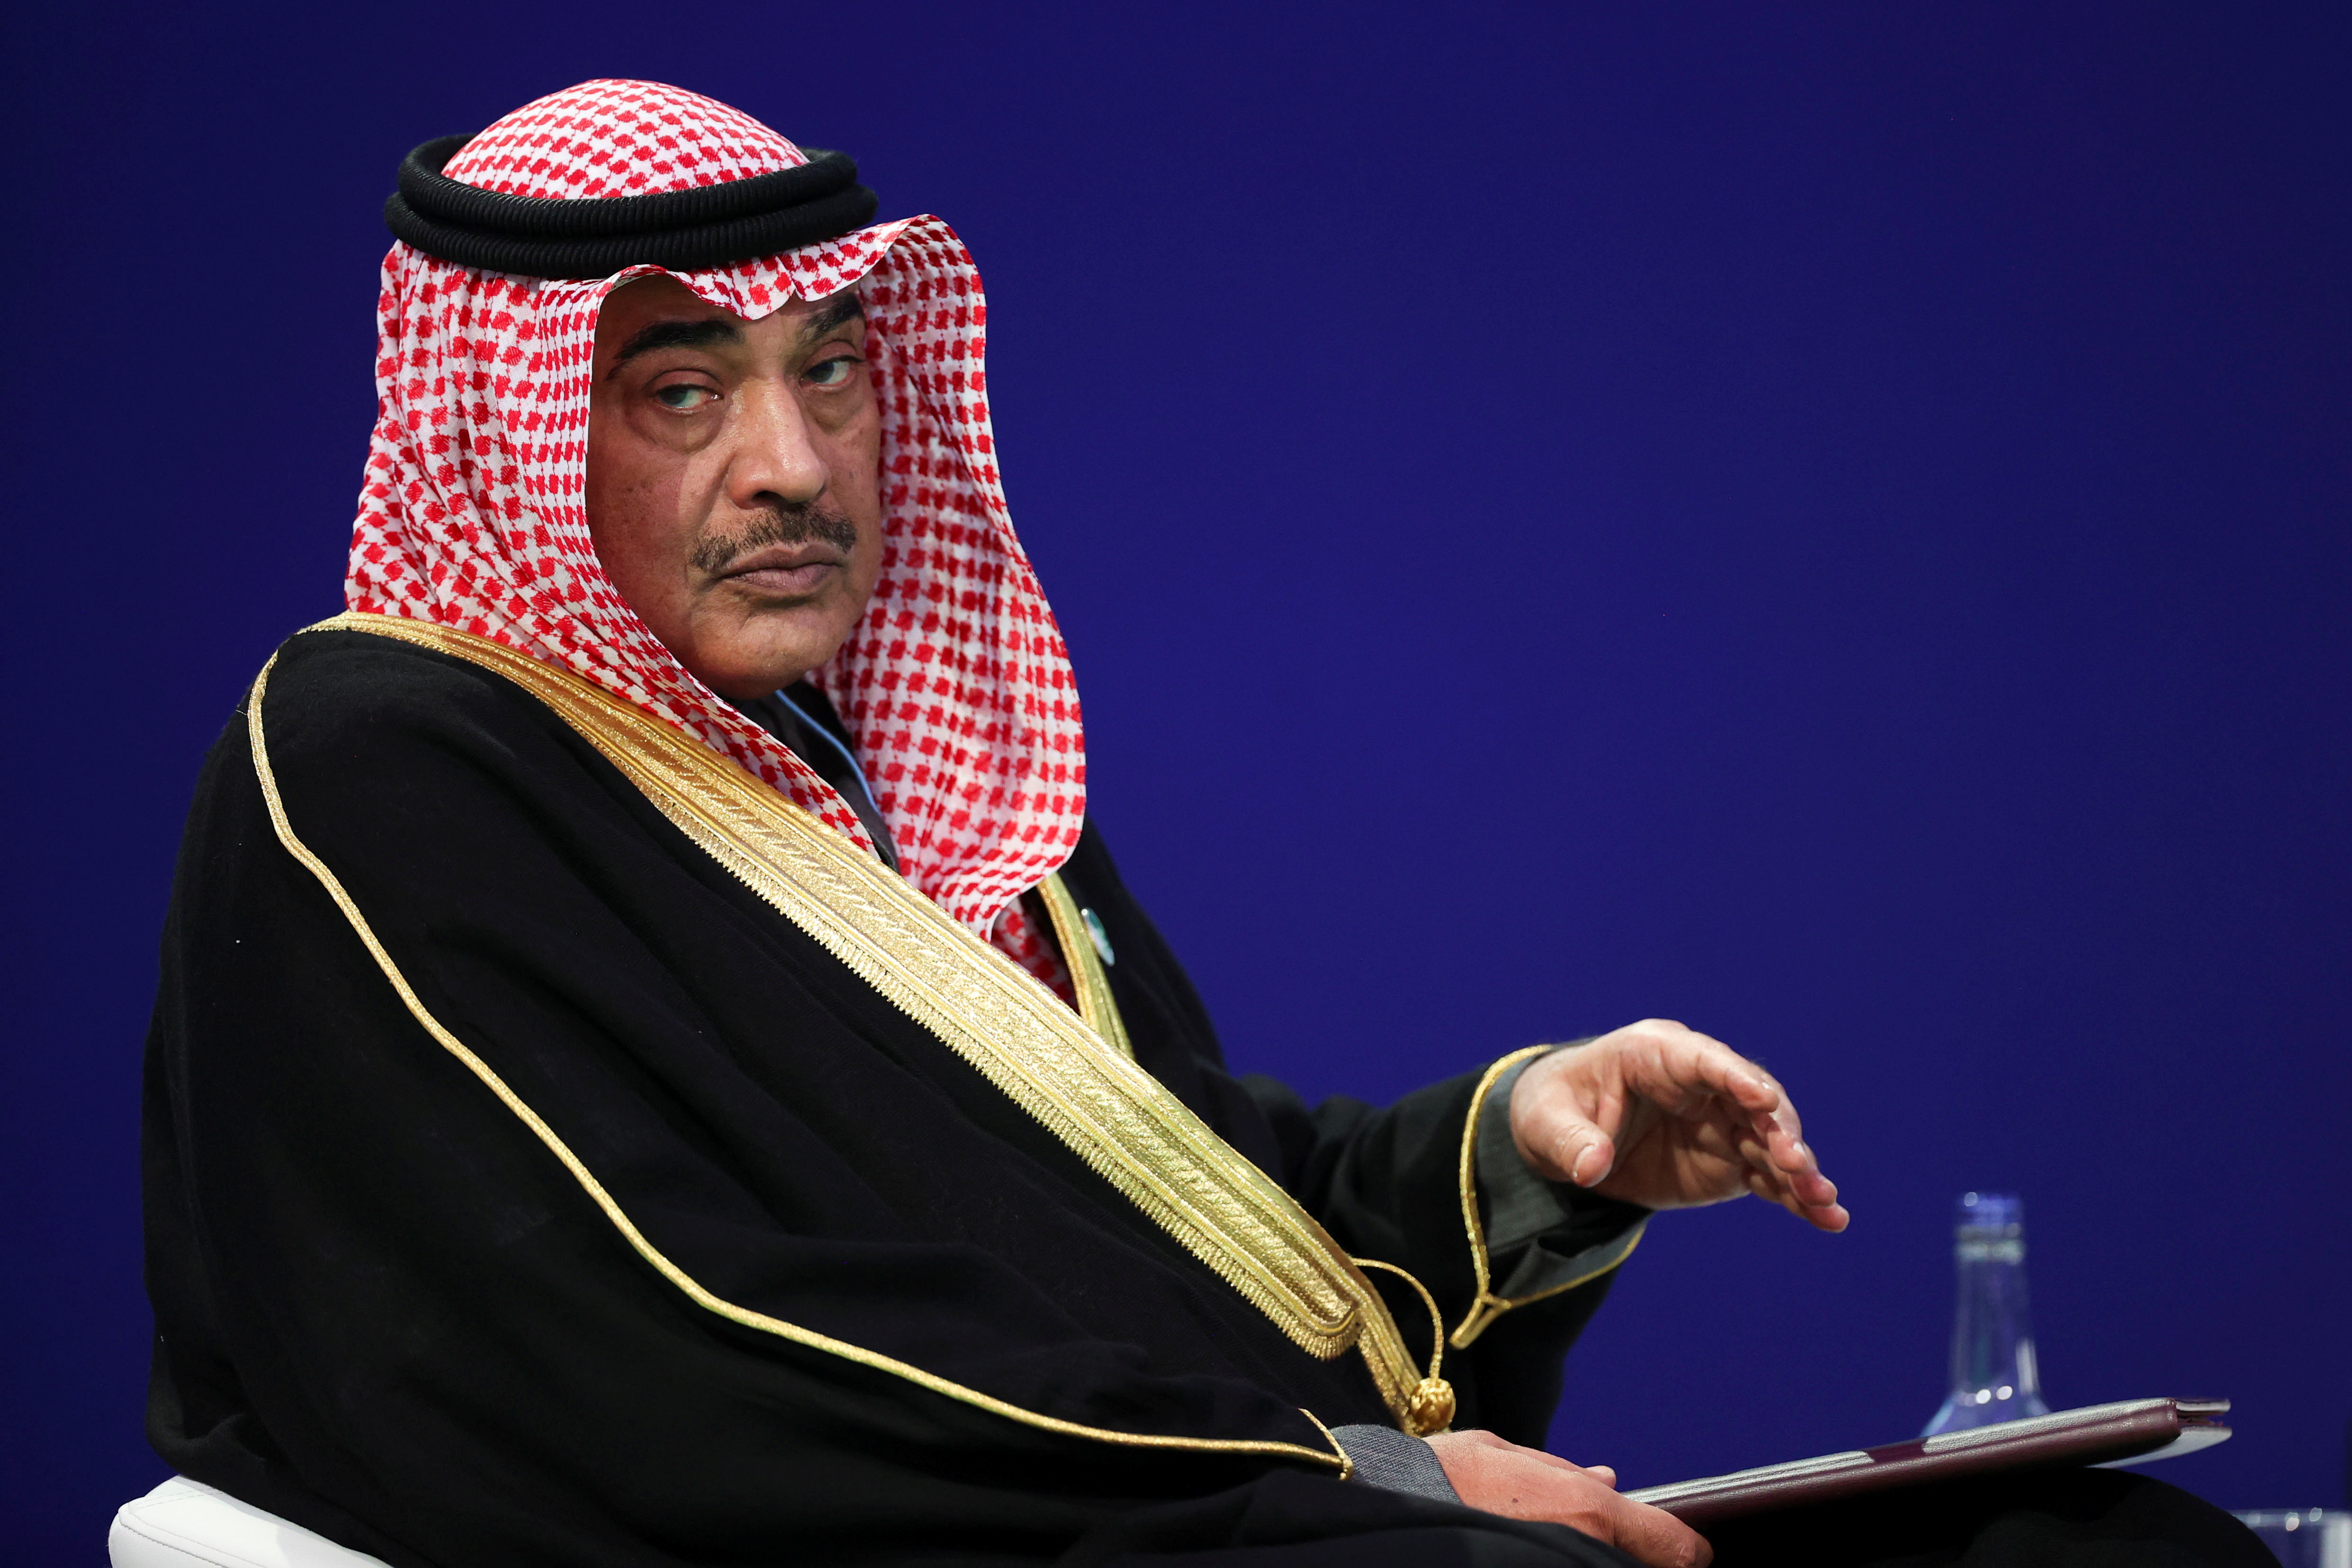 Kuwait's Prime Minister Sheikh Sabah al-Khalid al-Sabah waits before speaking during the UN Climate Change Conference (COP26) in Glasgow